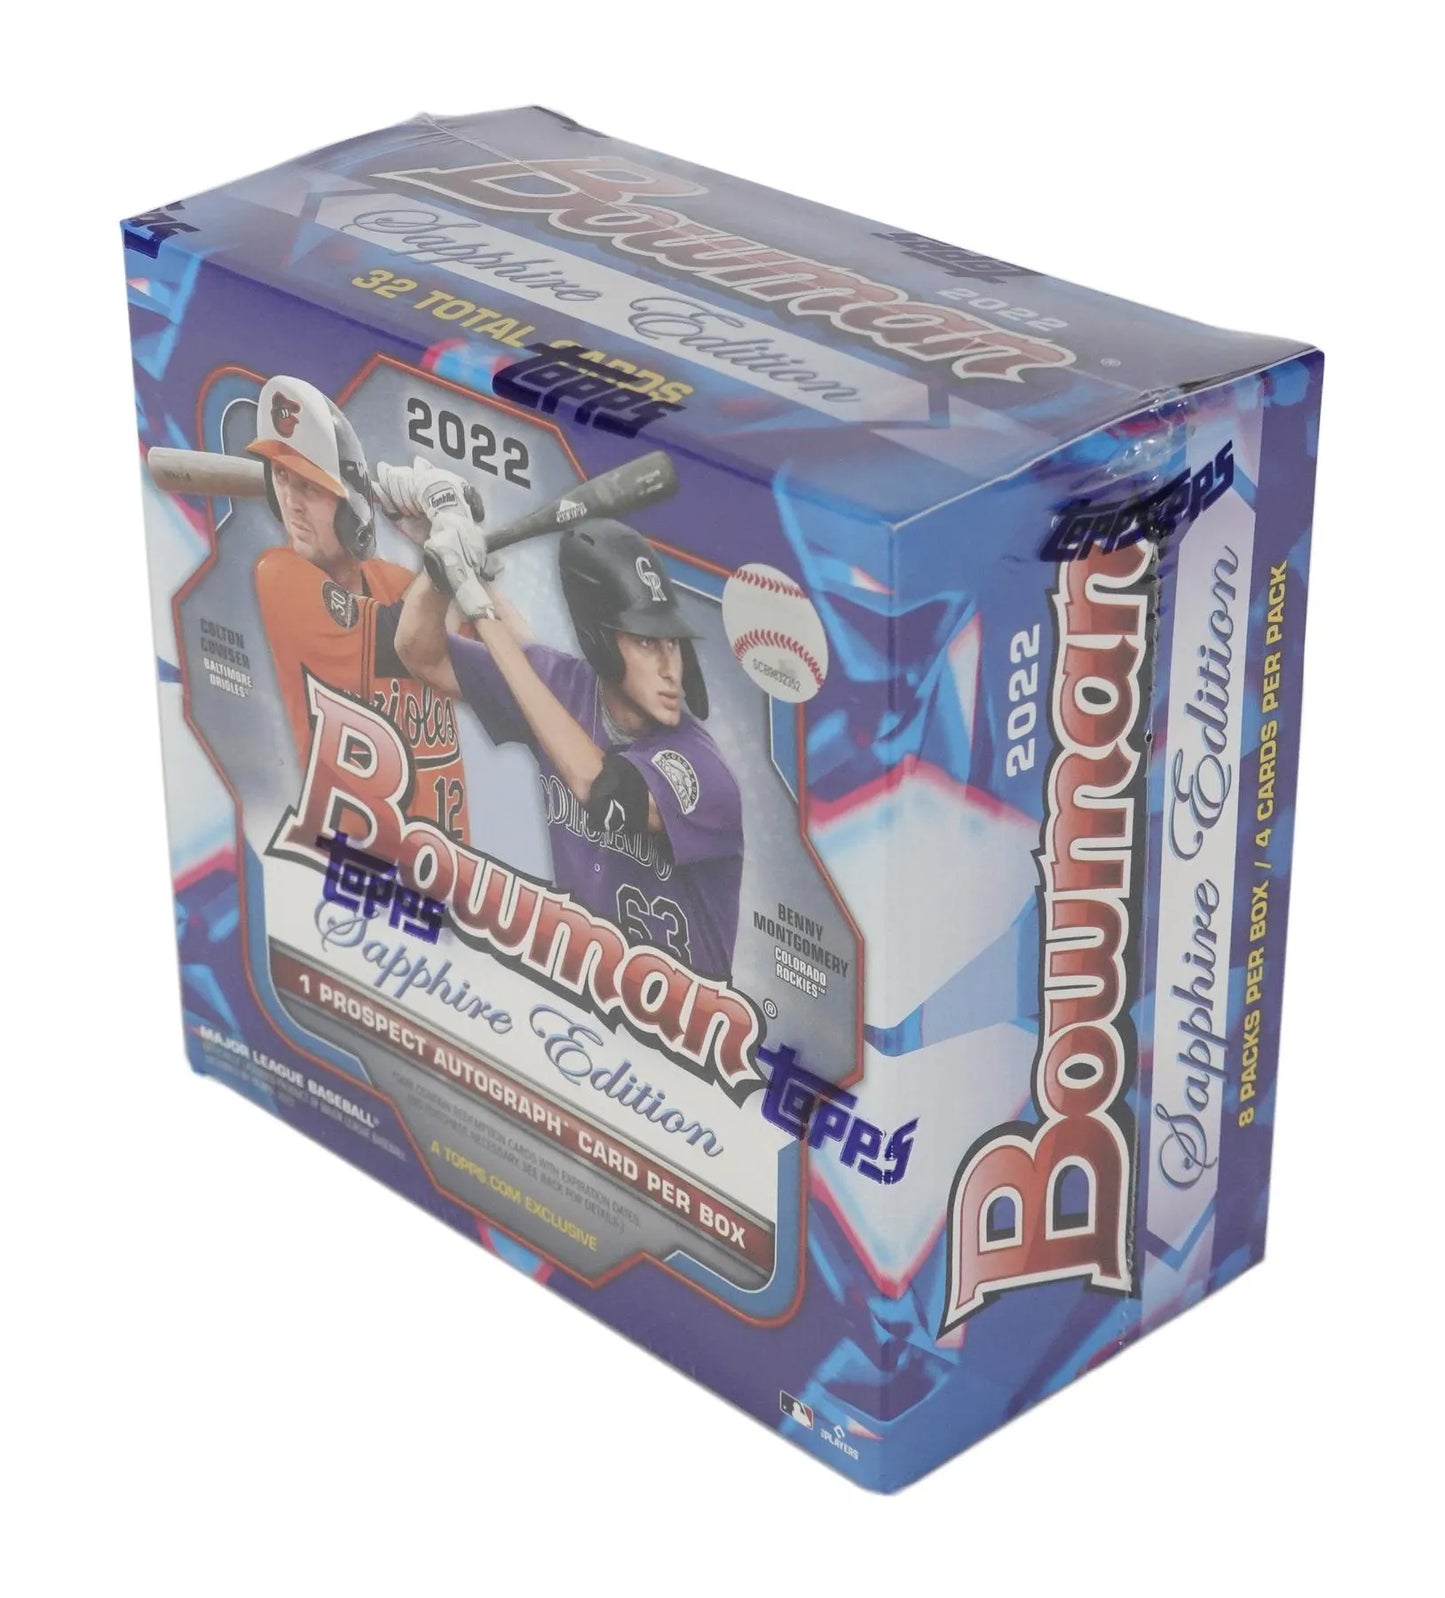 2022 Bowman Baseball Sapphire Edition Hobby Box